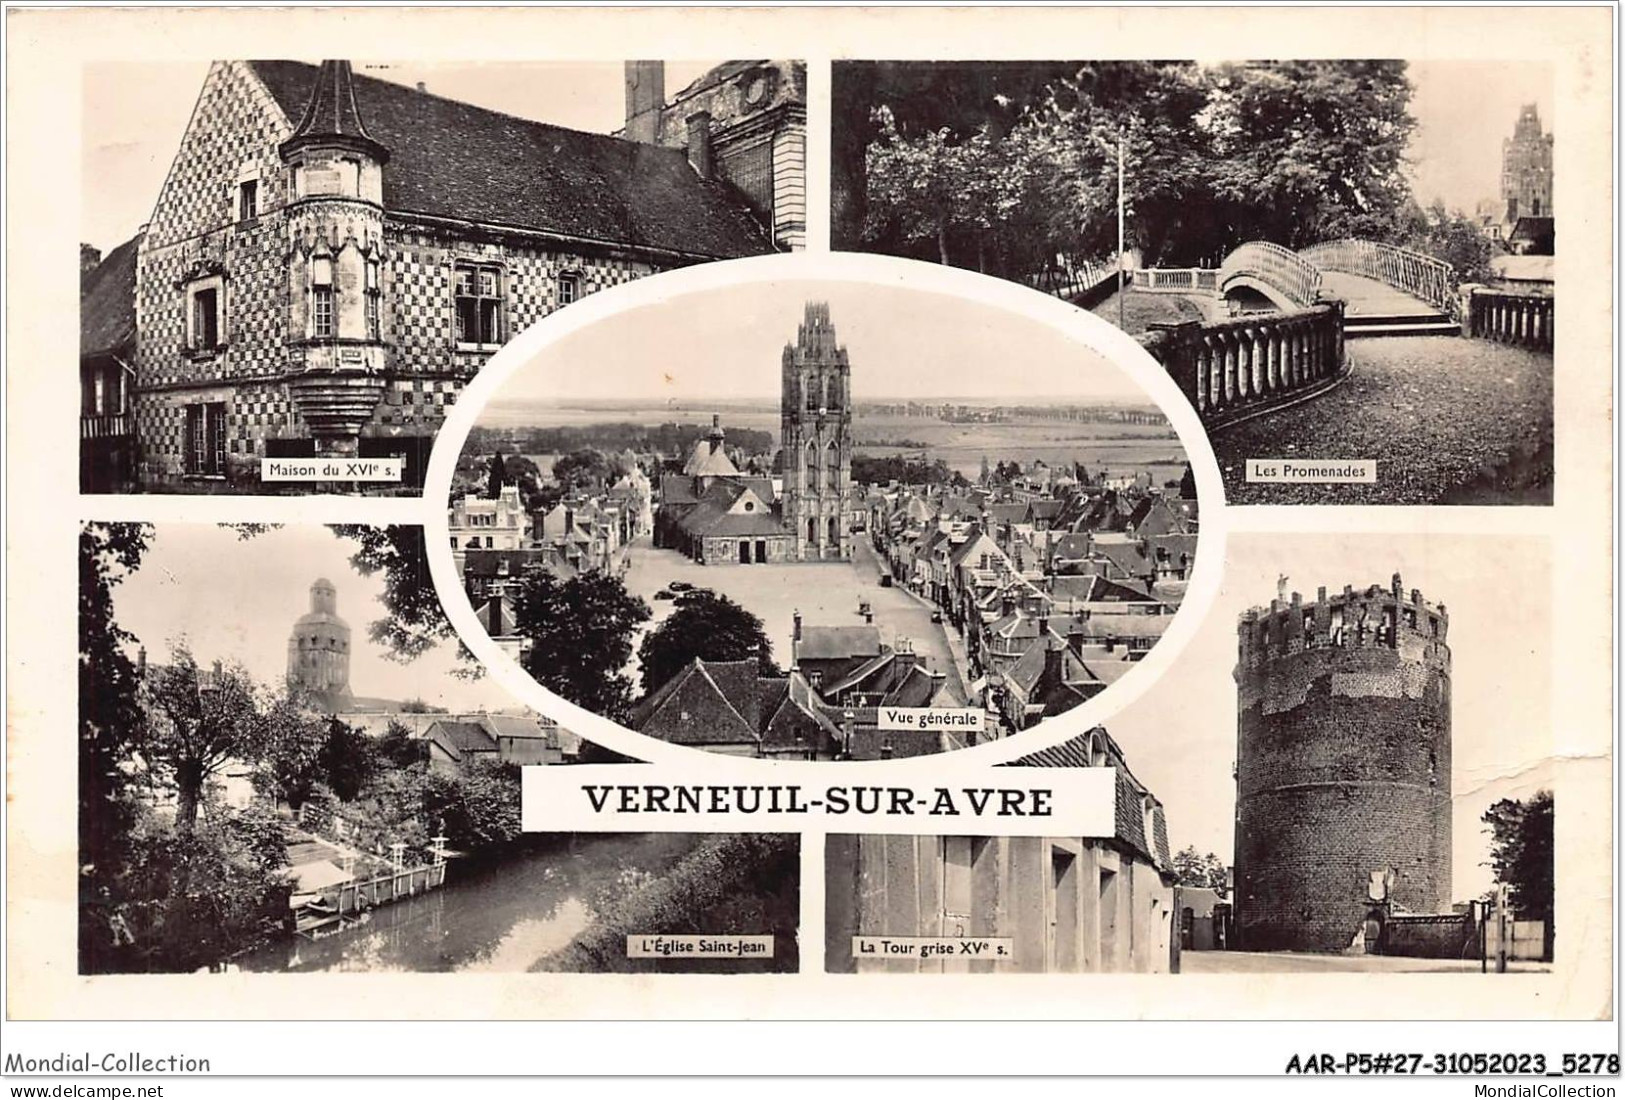 AARP5-0393 - VERNEUIL-SUR-AVRE - Verneuil-sur-Avre